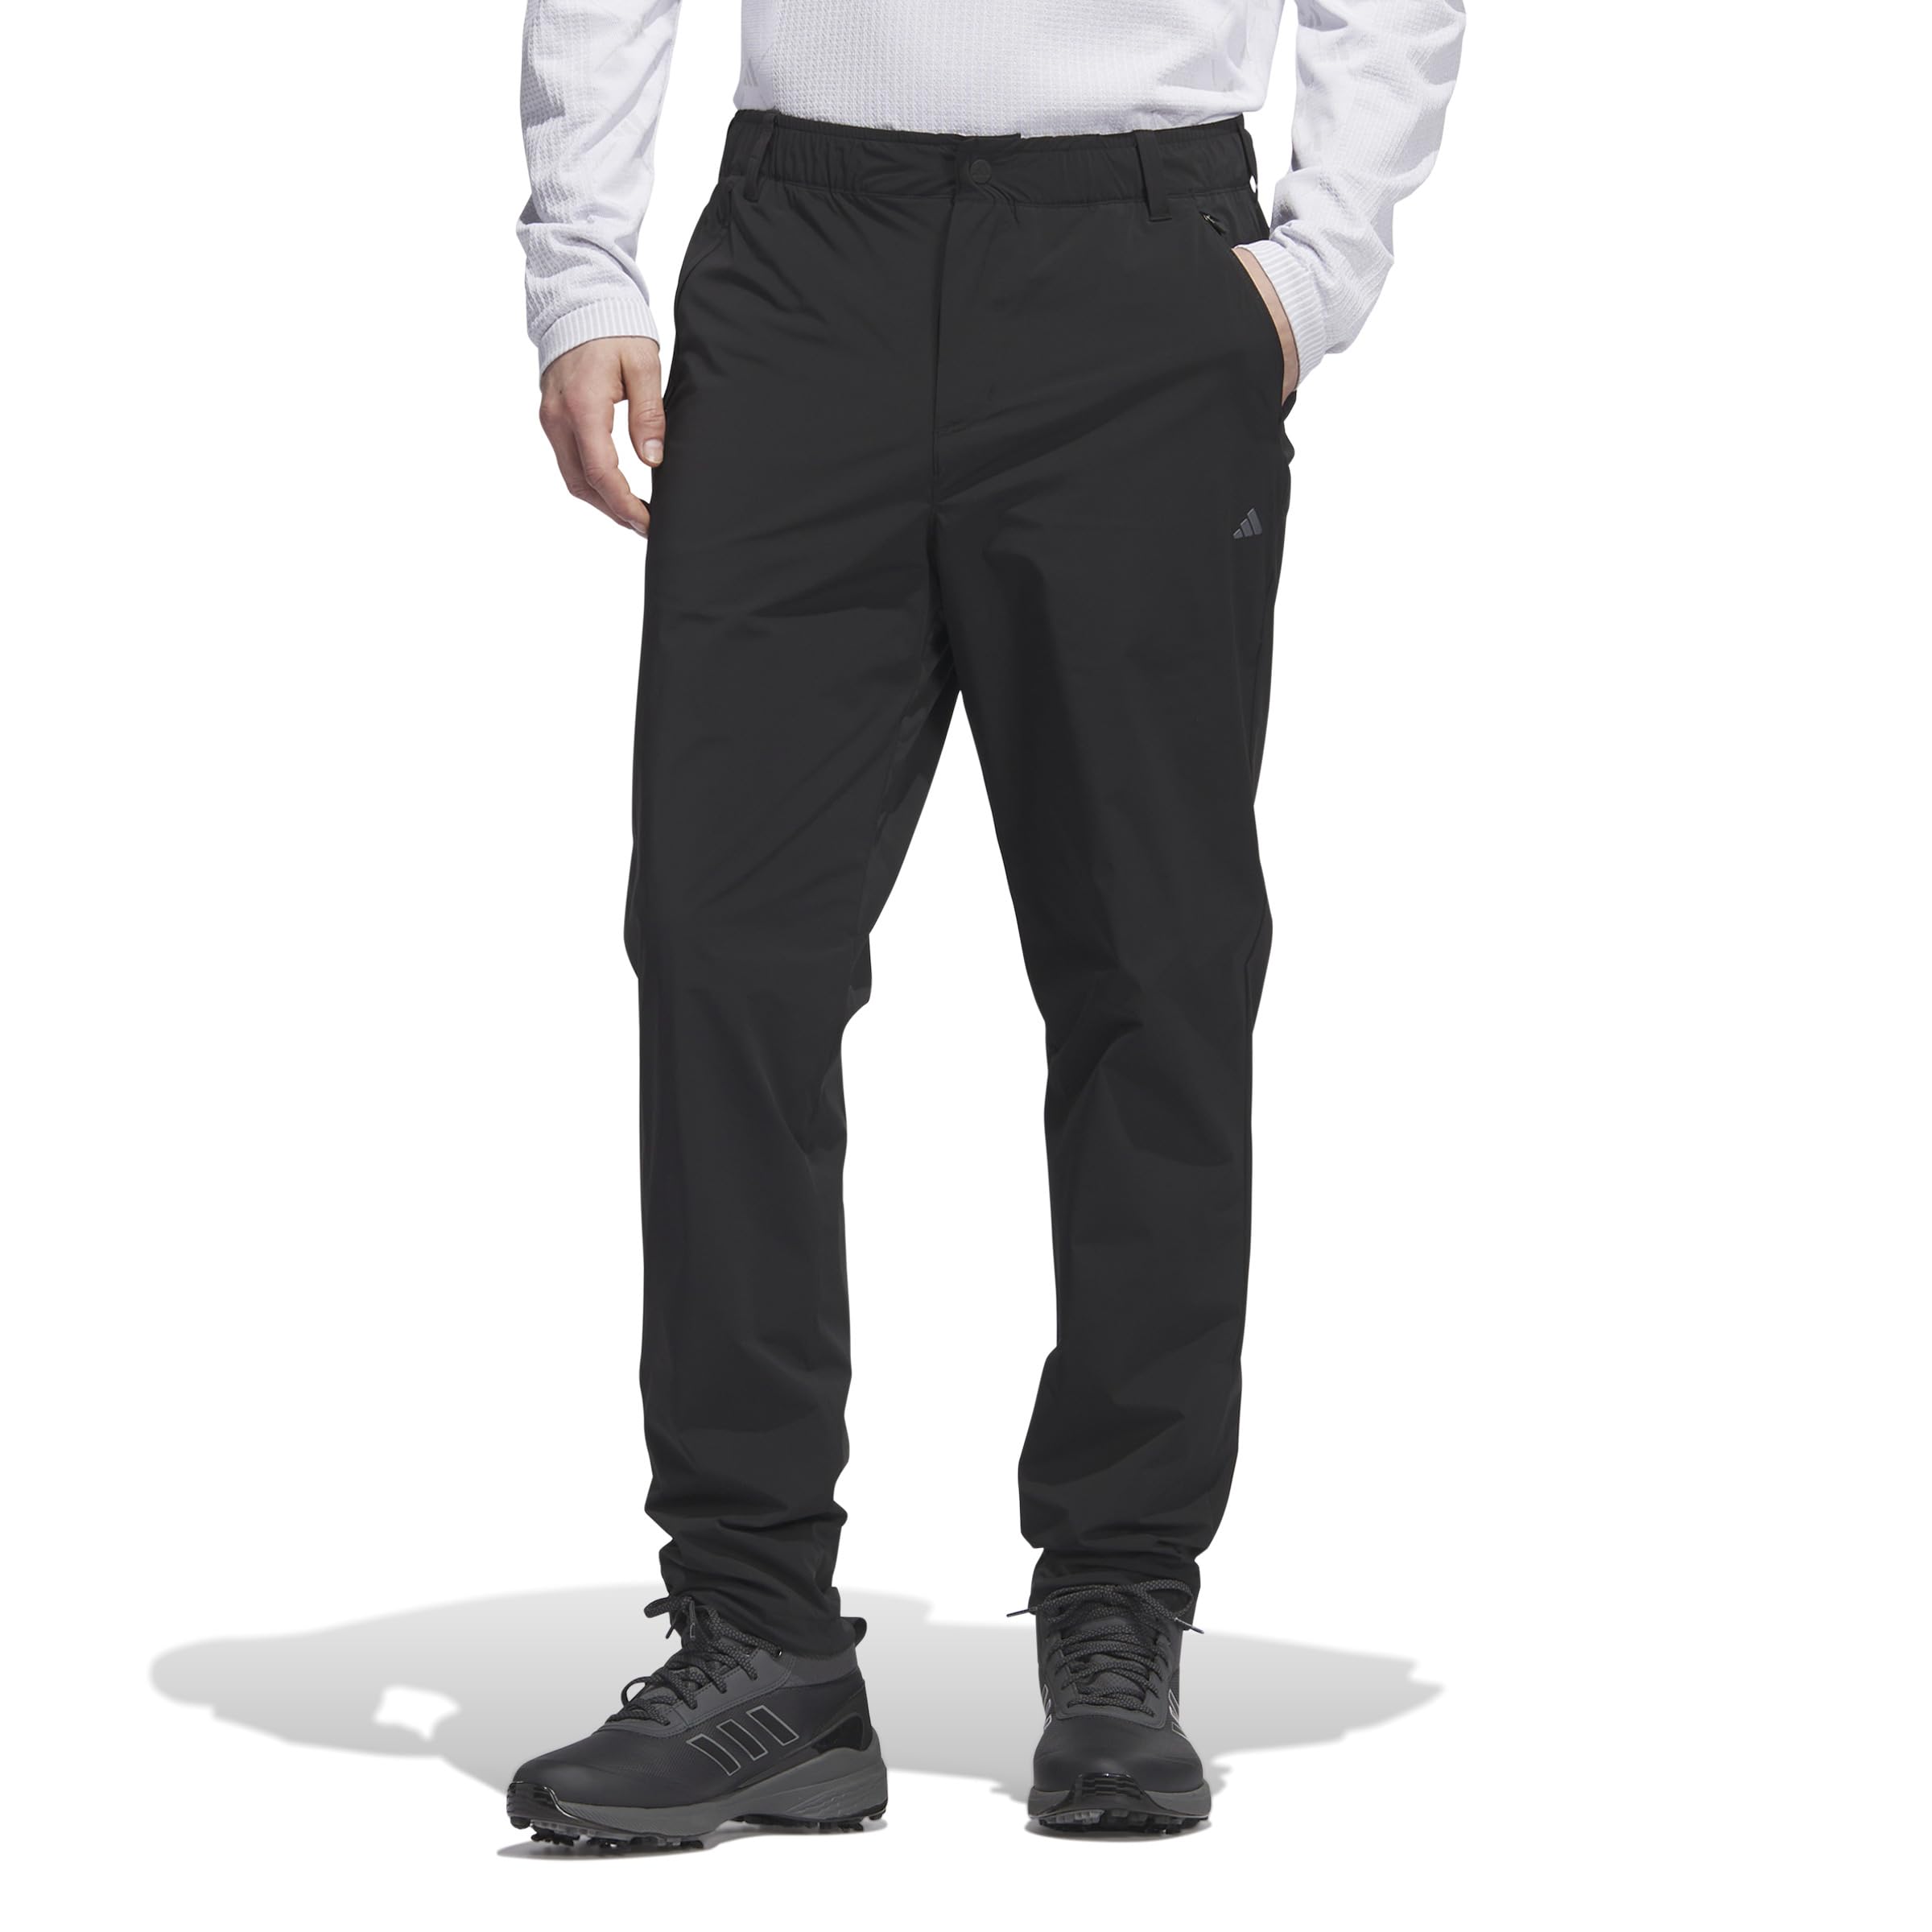 Теплые брюки Ultimate365 Tour Wind.RDY Adidas